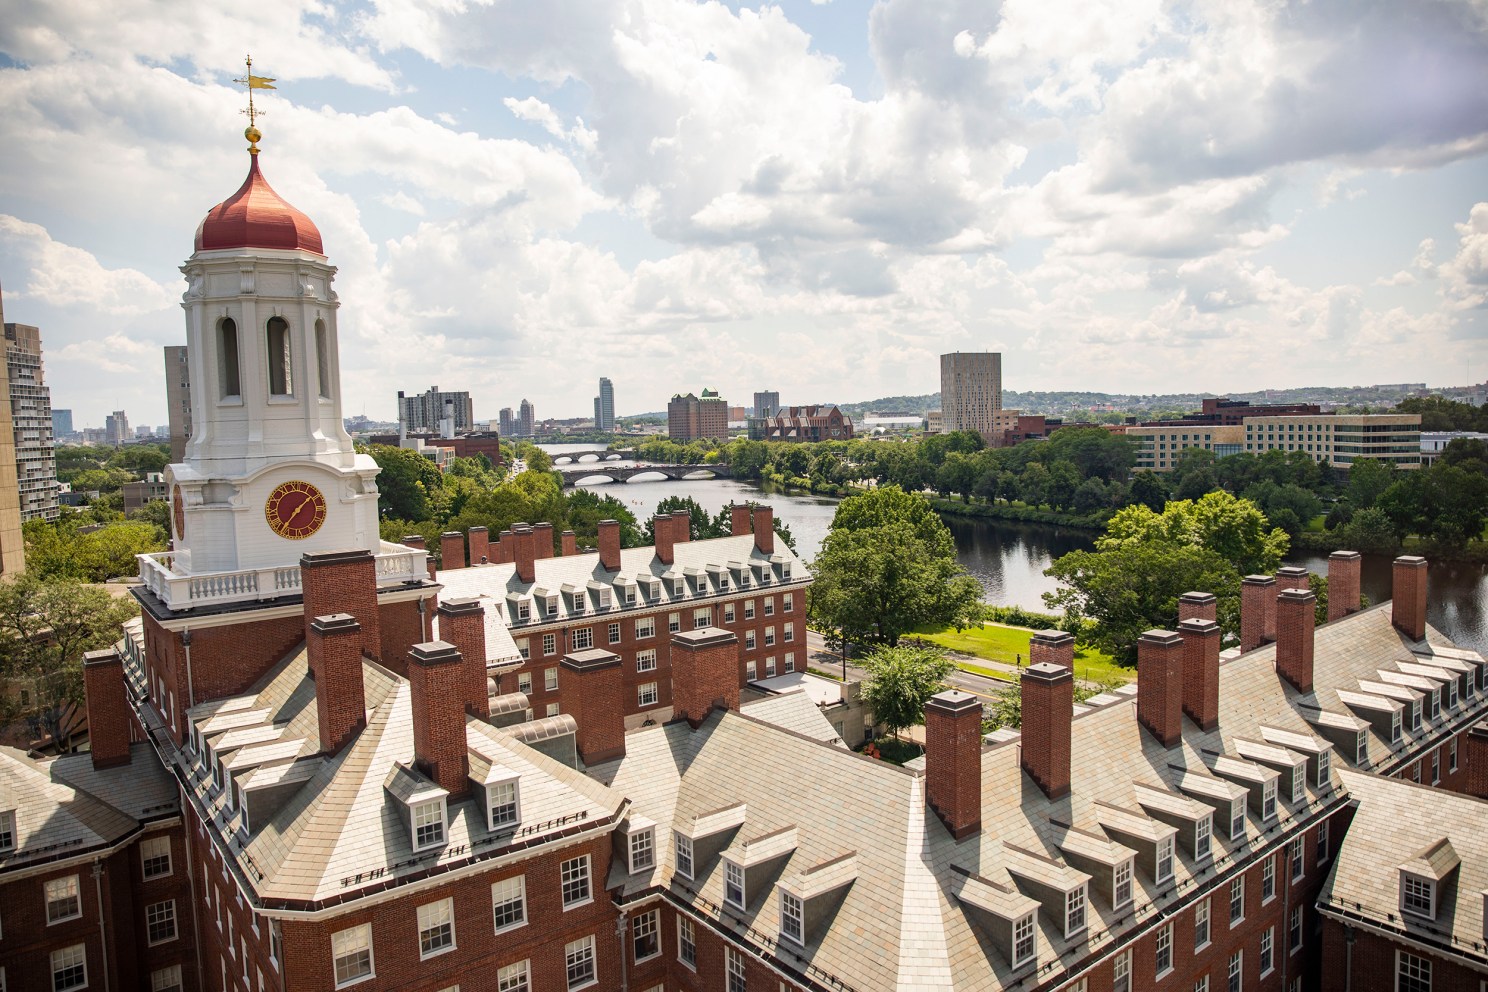 Overview of Harvard campus.